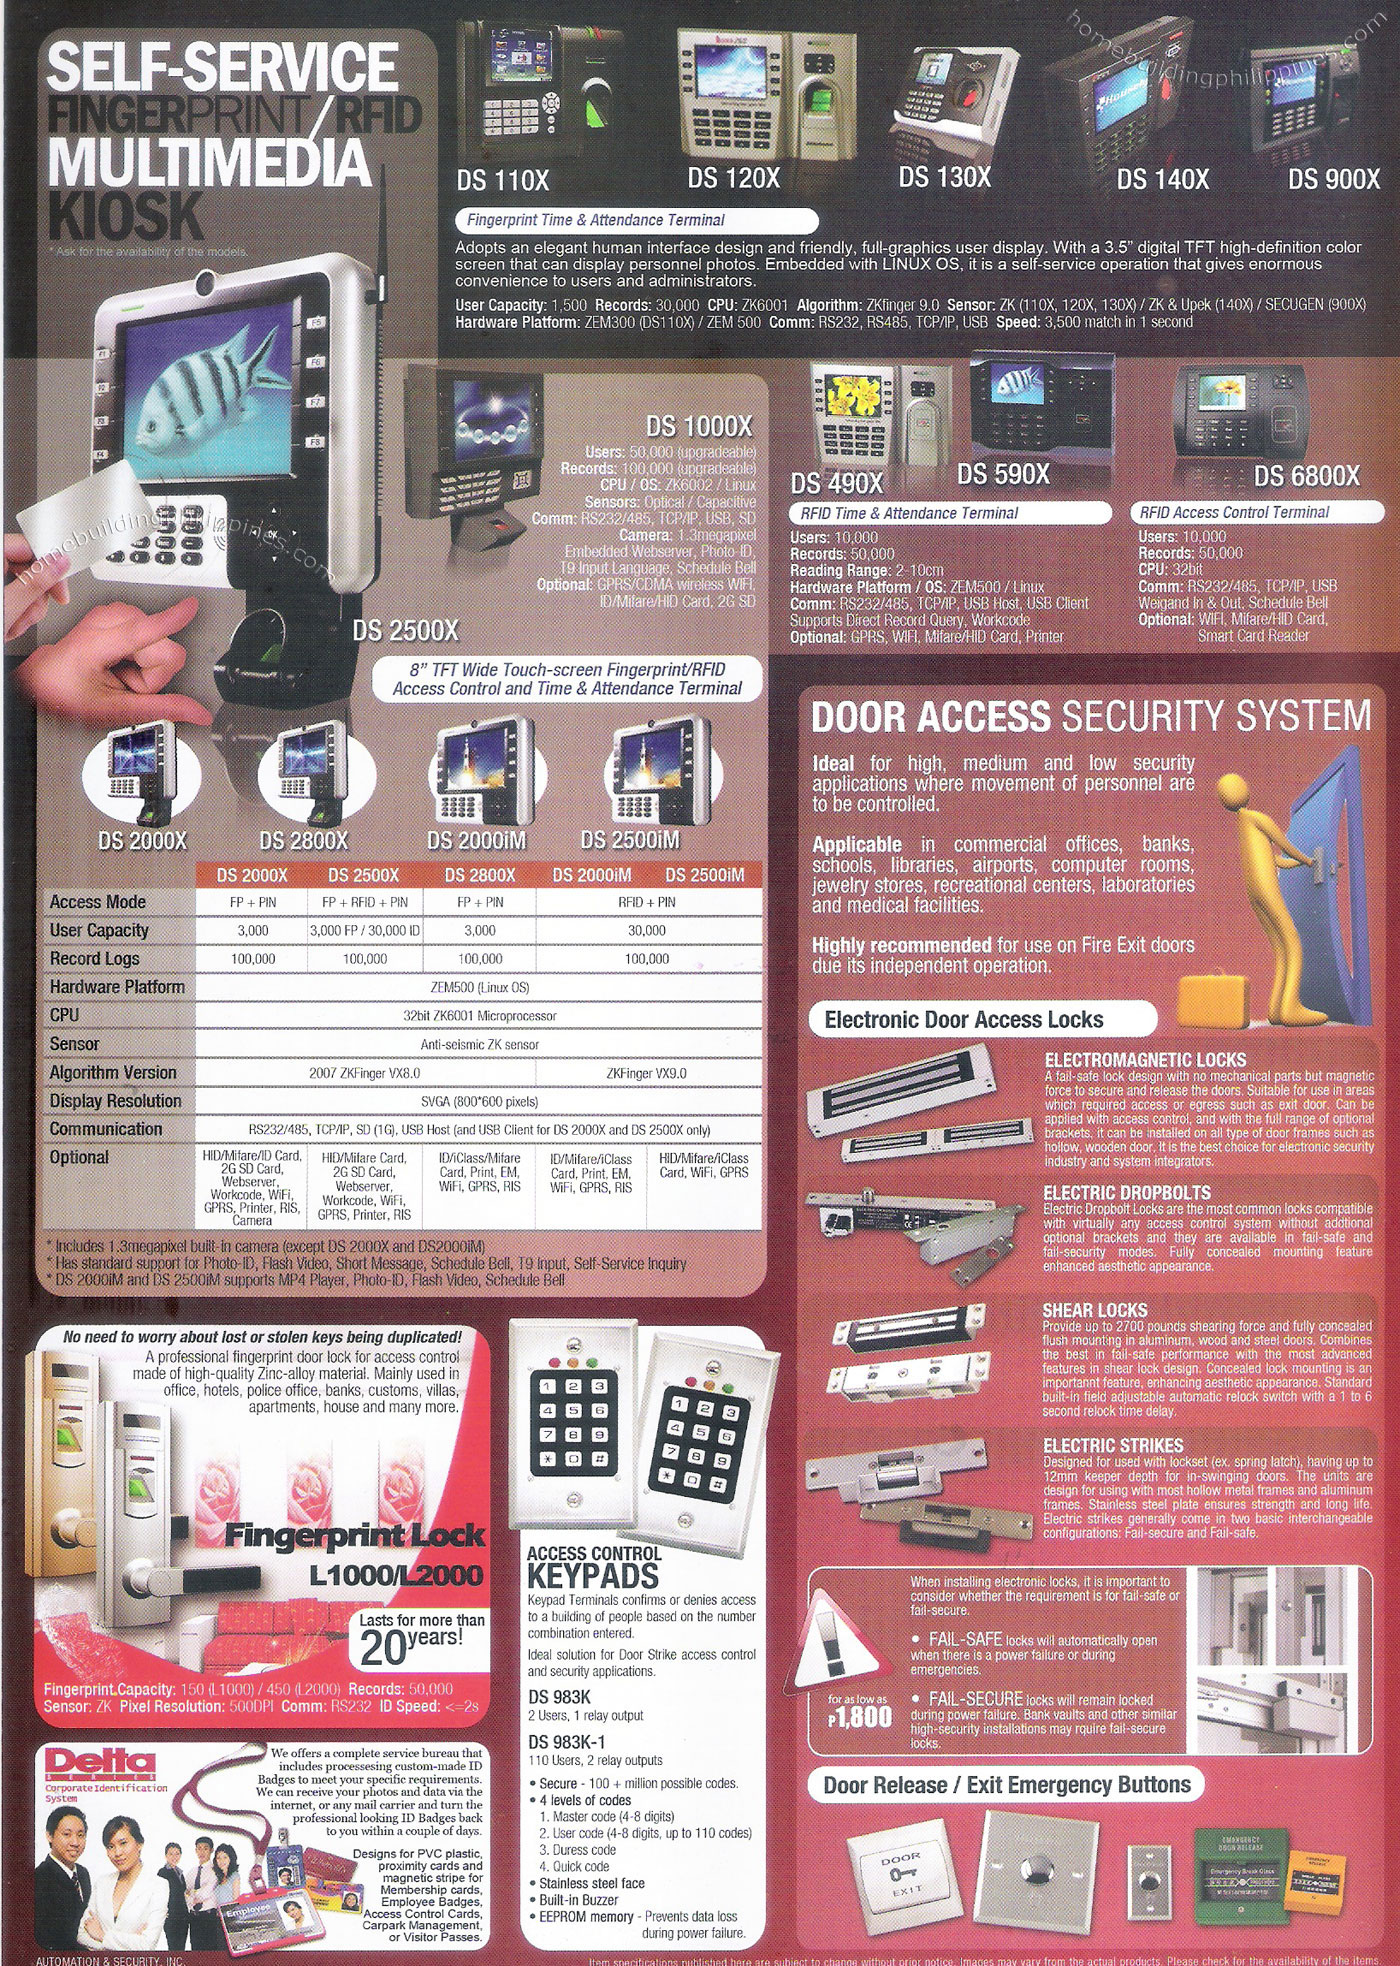 Self-Service Fingerprint RFID Multimedia Kiosk Time & Attendance Electronic Door Access Lock Release Exit Emergency